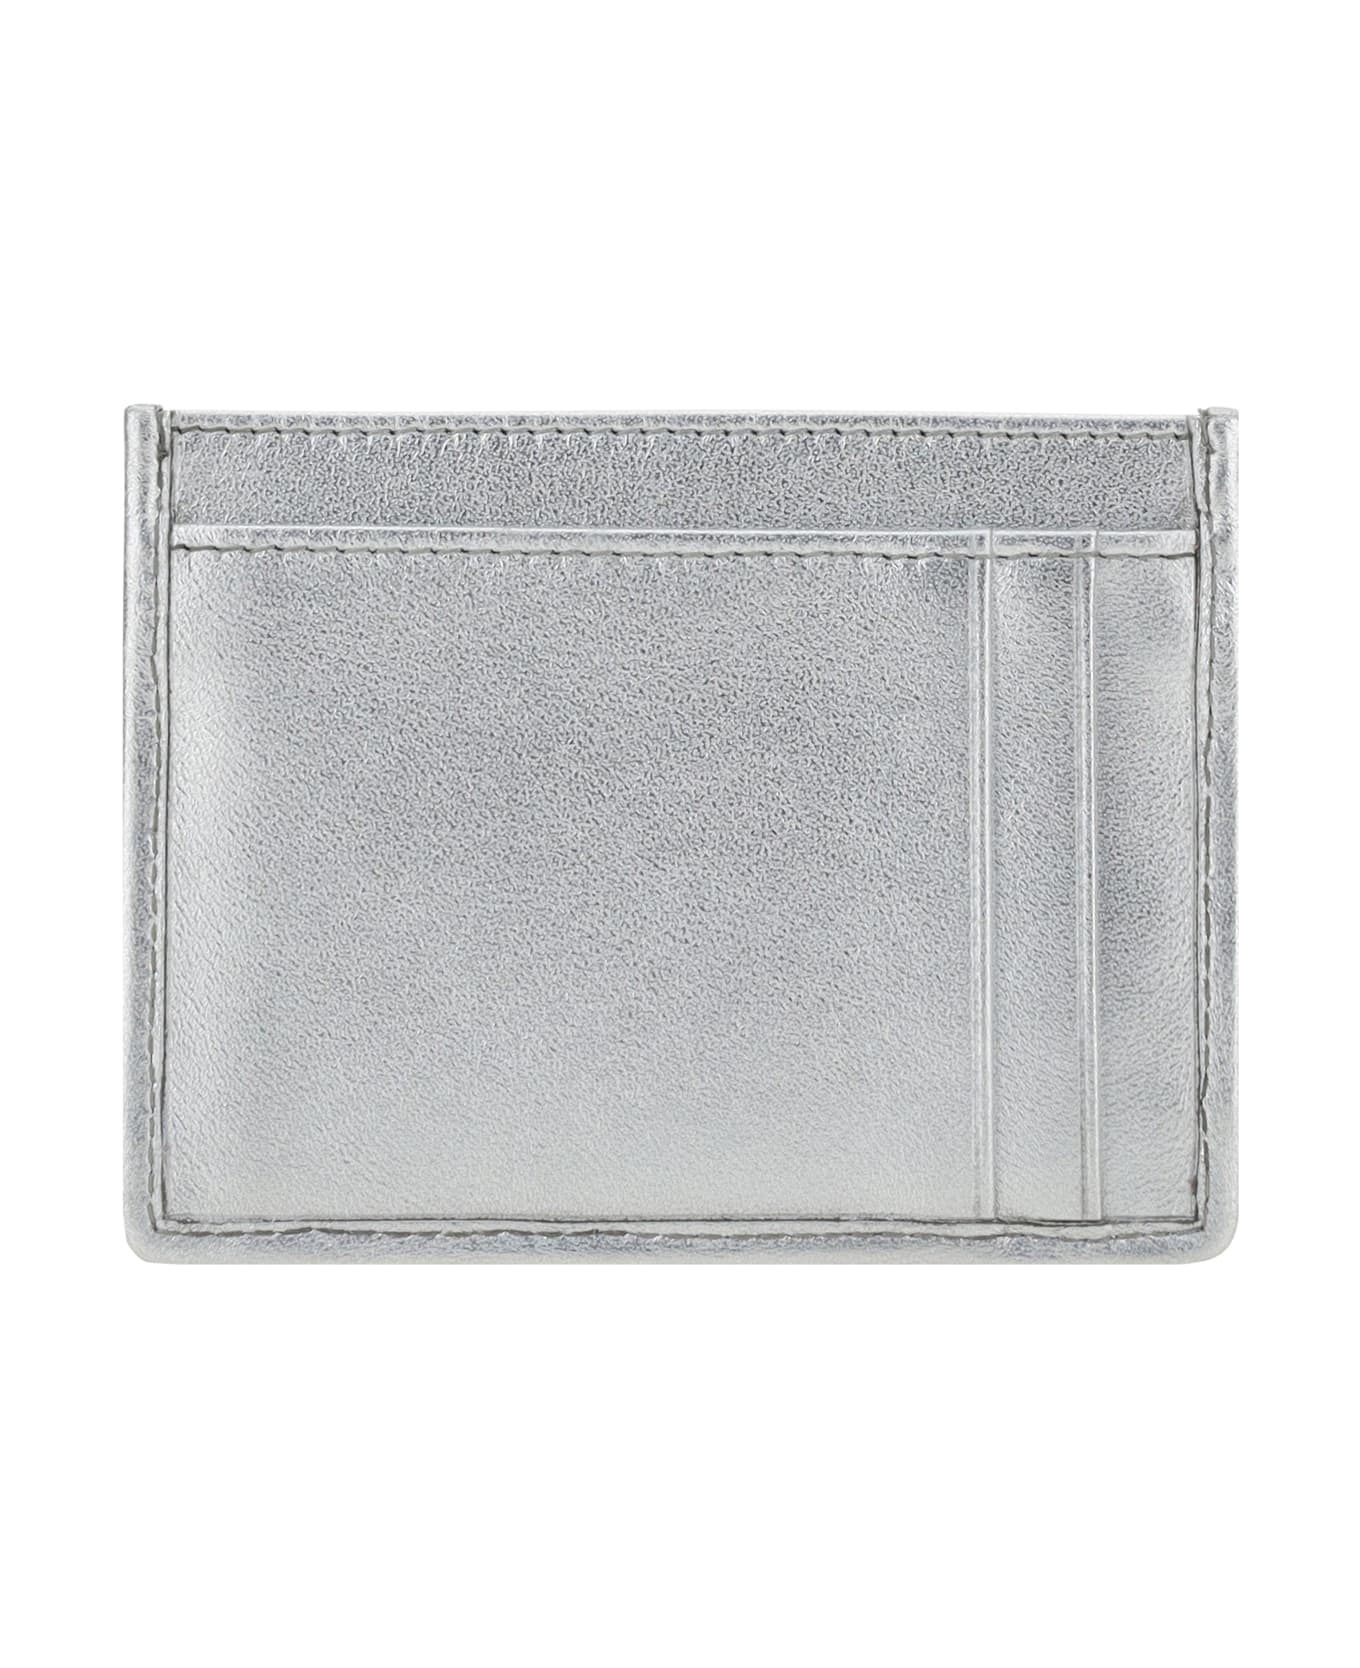 Miu Miu Logo Card Holder - Silver 財布